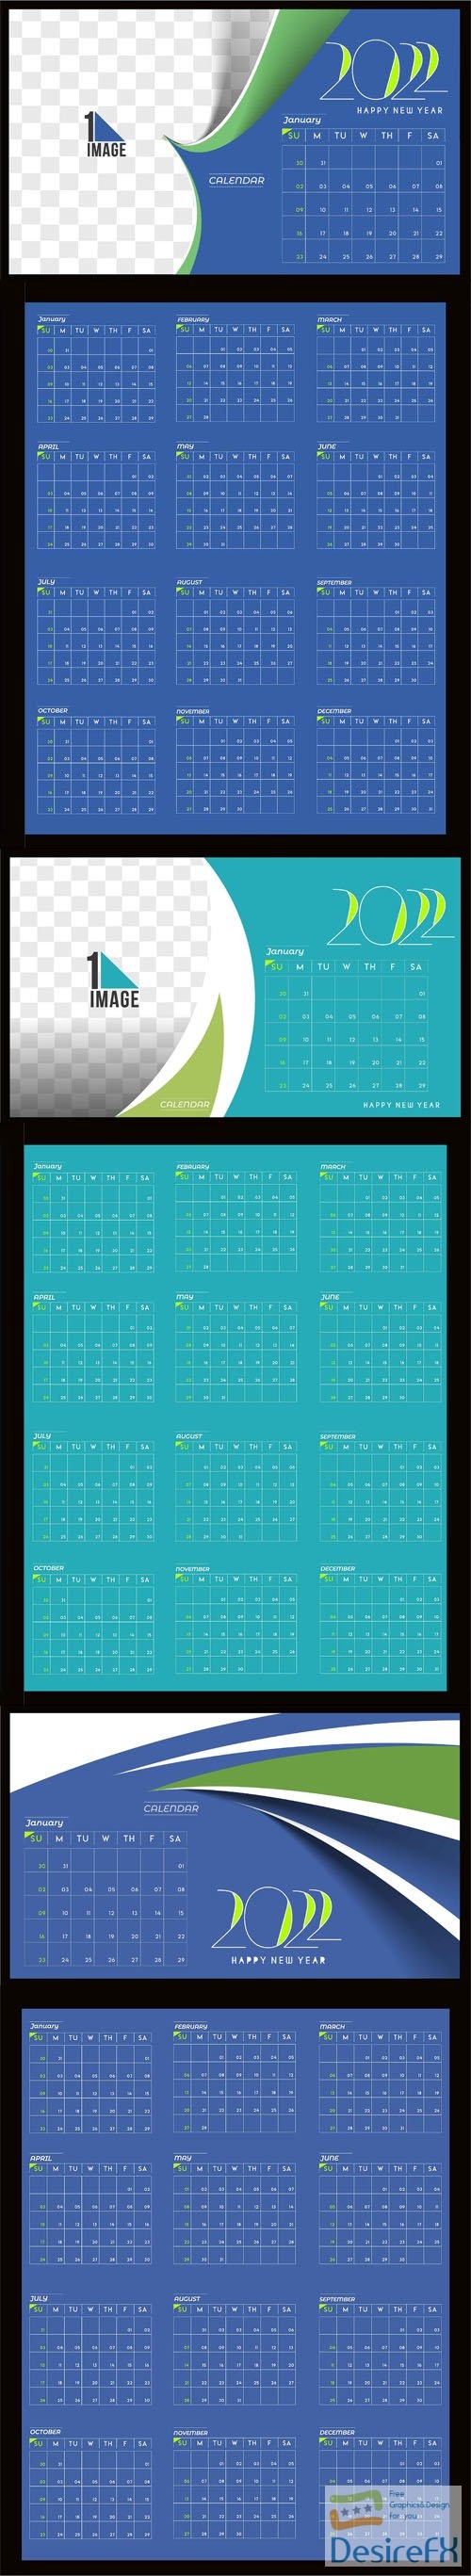 New Year 2022 Calendars Vector Design Templates